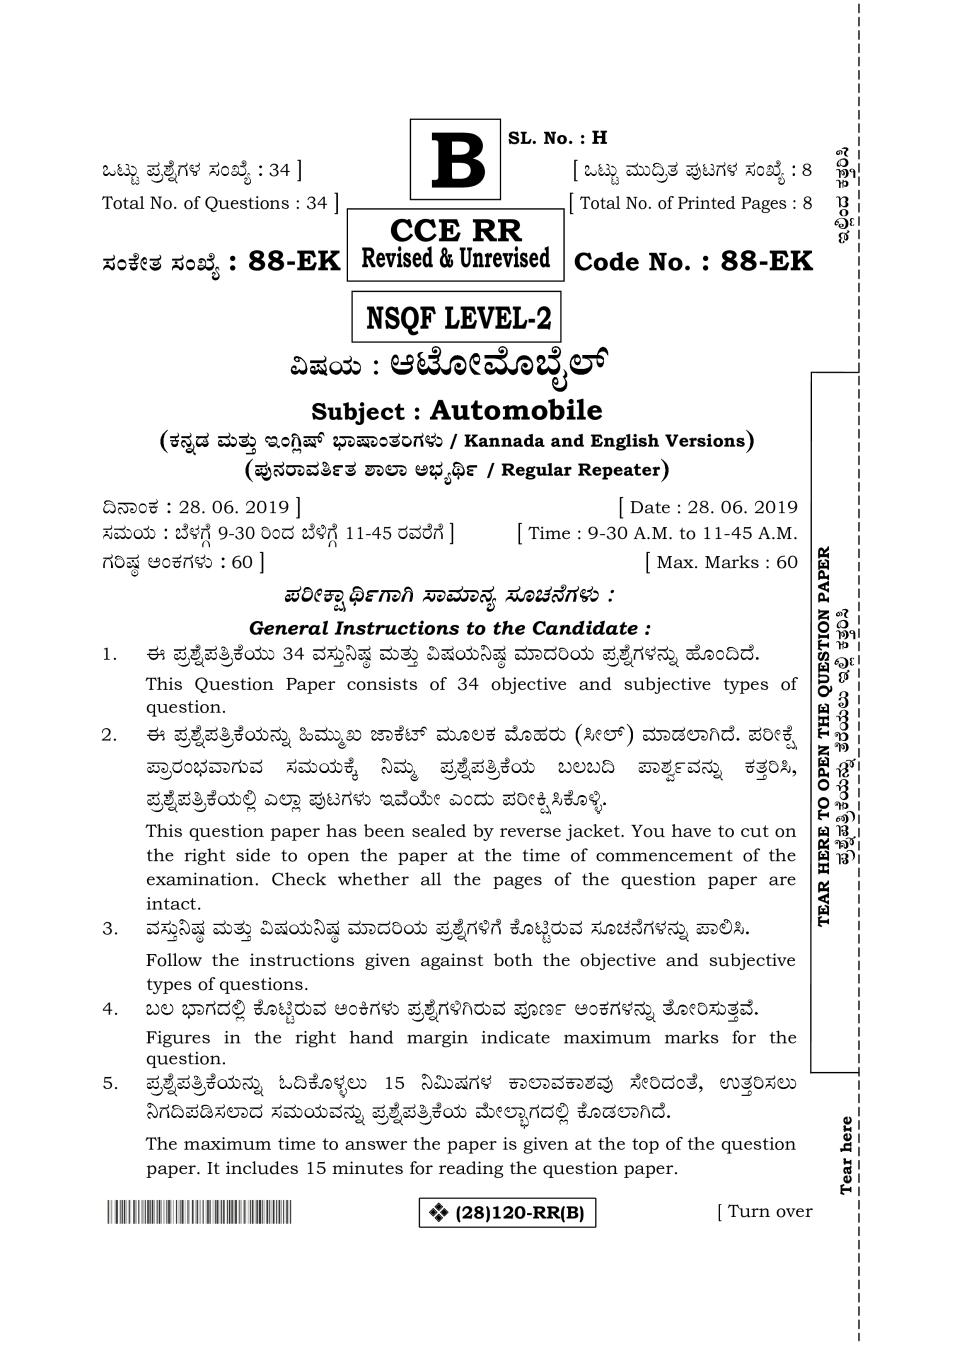 Karnataka SSLC Automobile Question paper Jun 2019 - Page 1